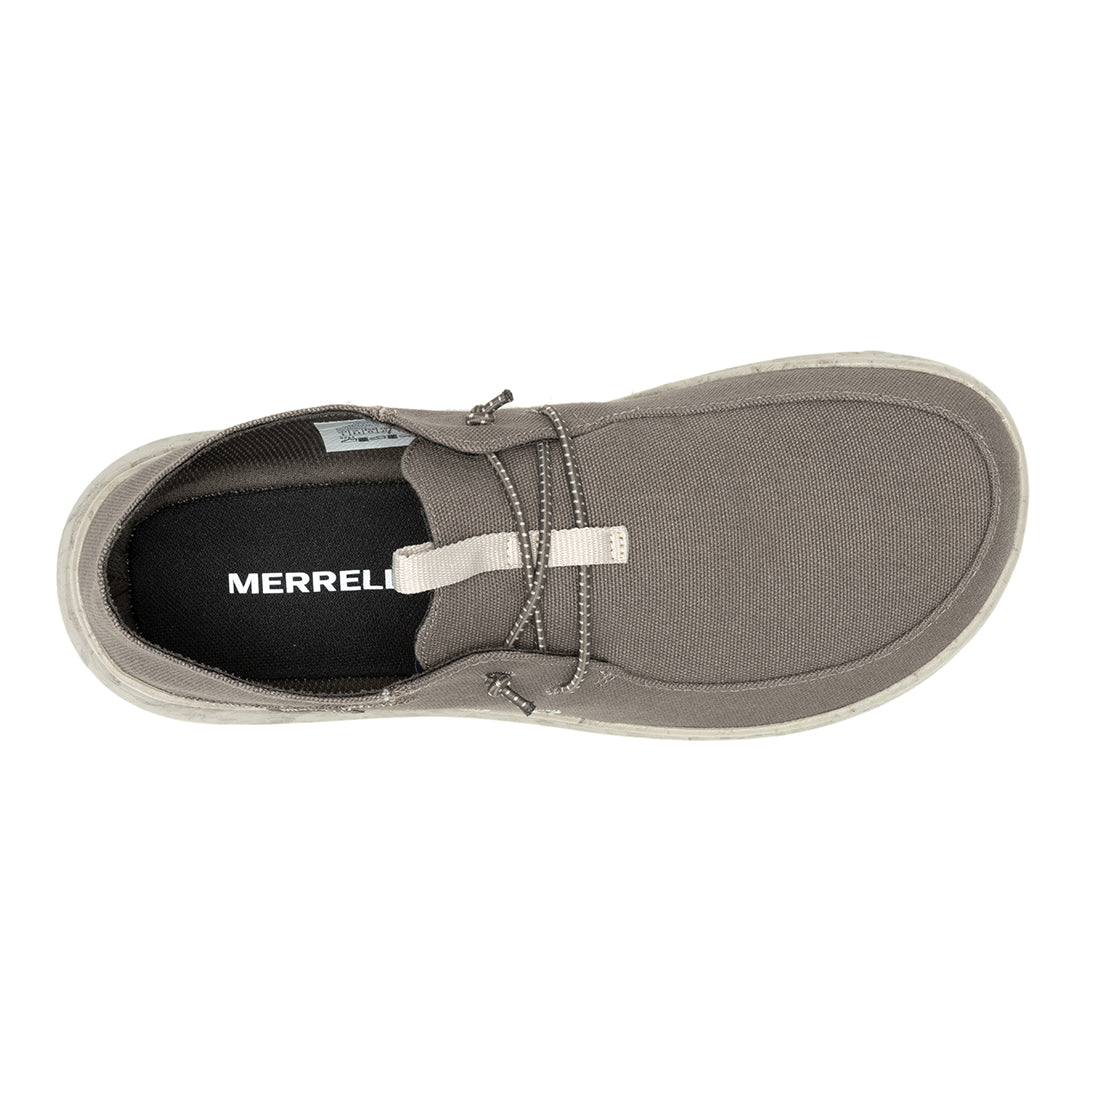 Merrell Hut Moc 2 Canvas - Gunsmoke Mens Aftersports - Athletic Shoes